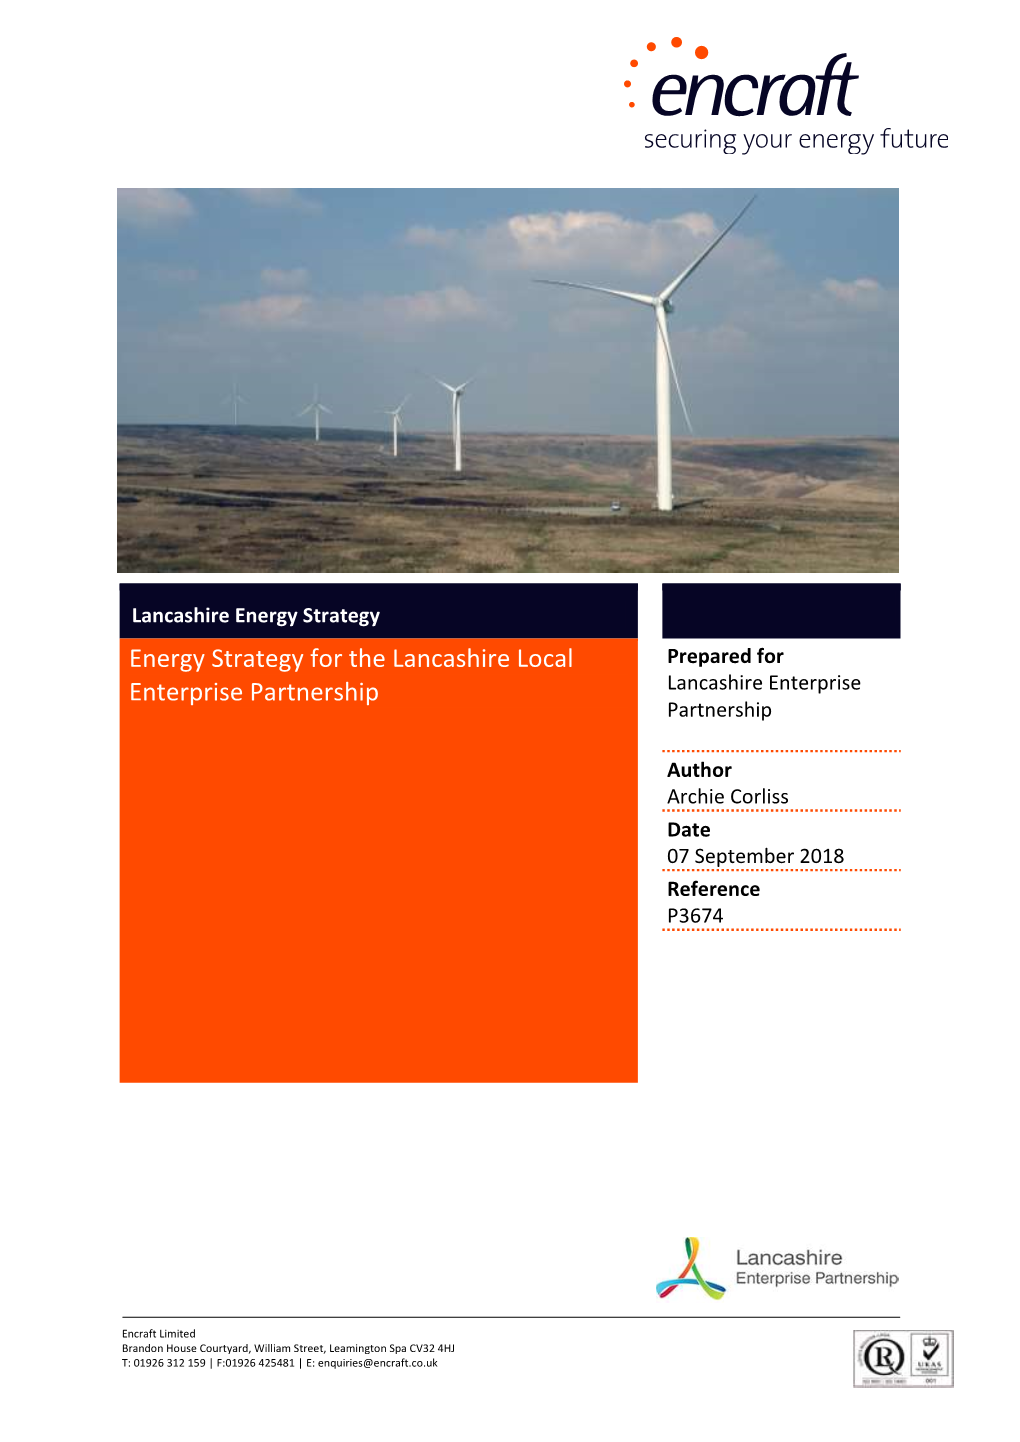 Energy Strategy for the Lancashire Local Enterprise Partnership